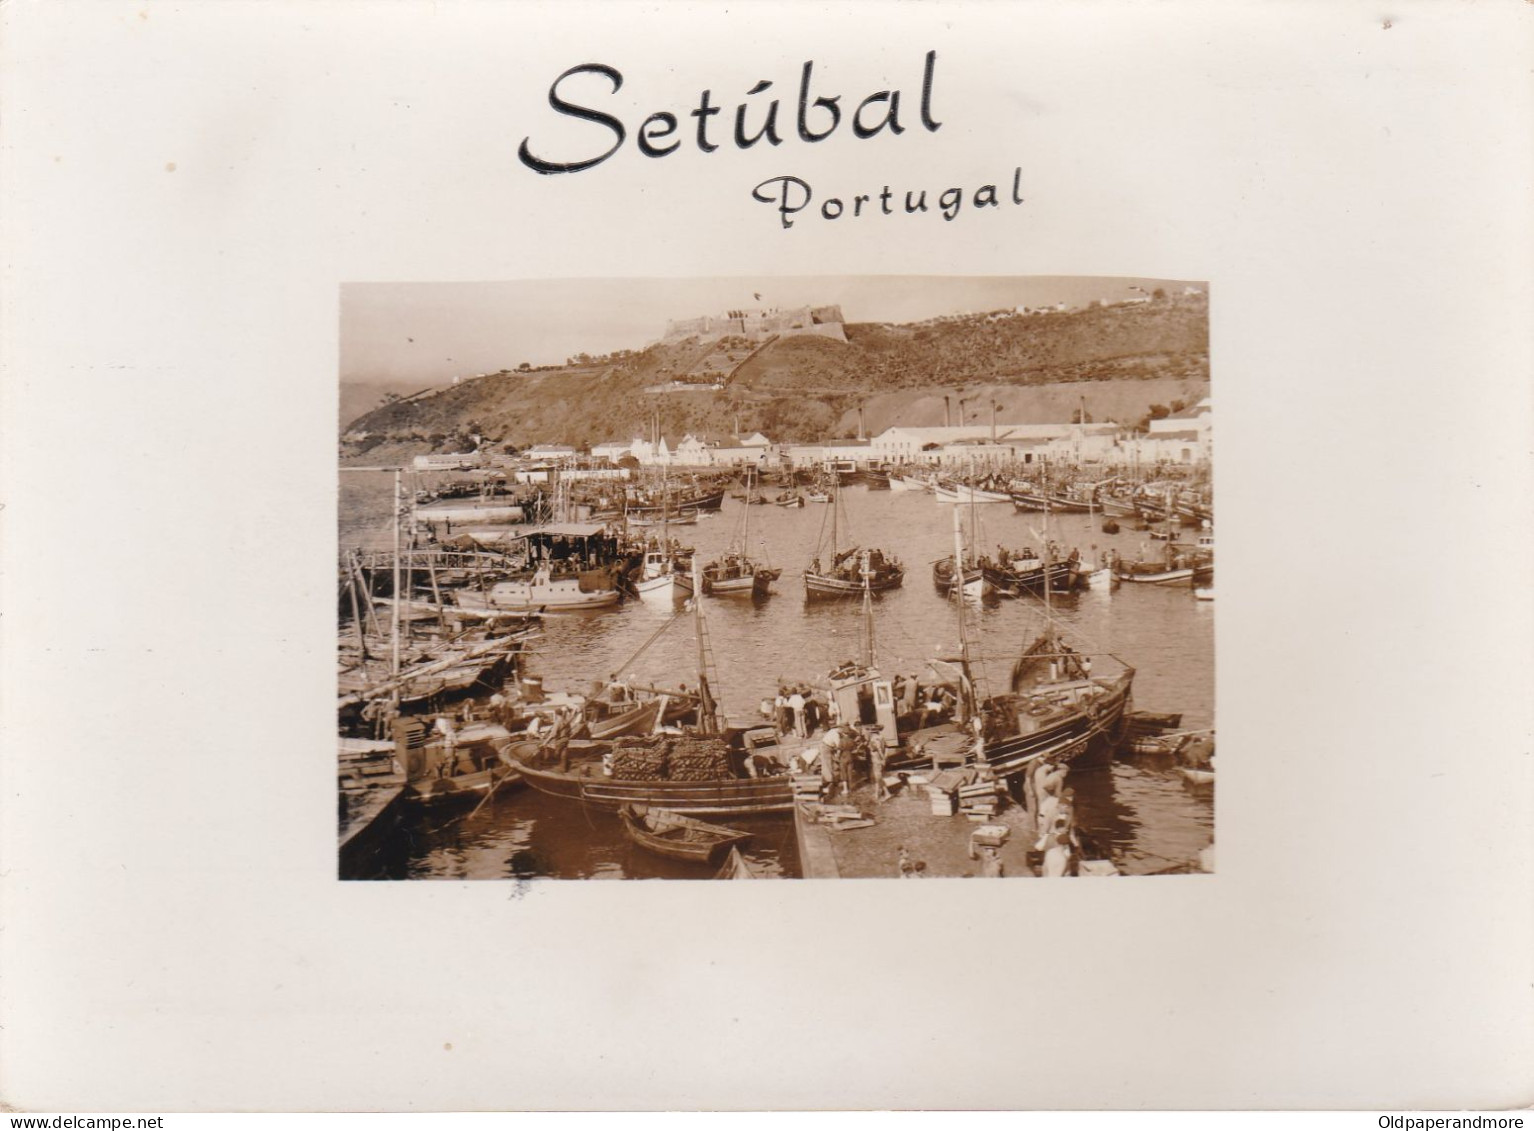 POSTCARD PORTUGAL - SETUBAL - Setúbal